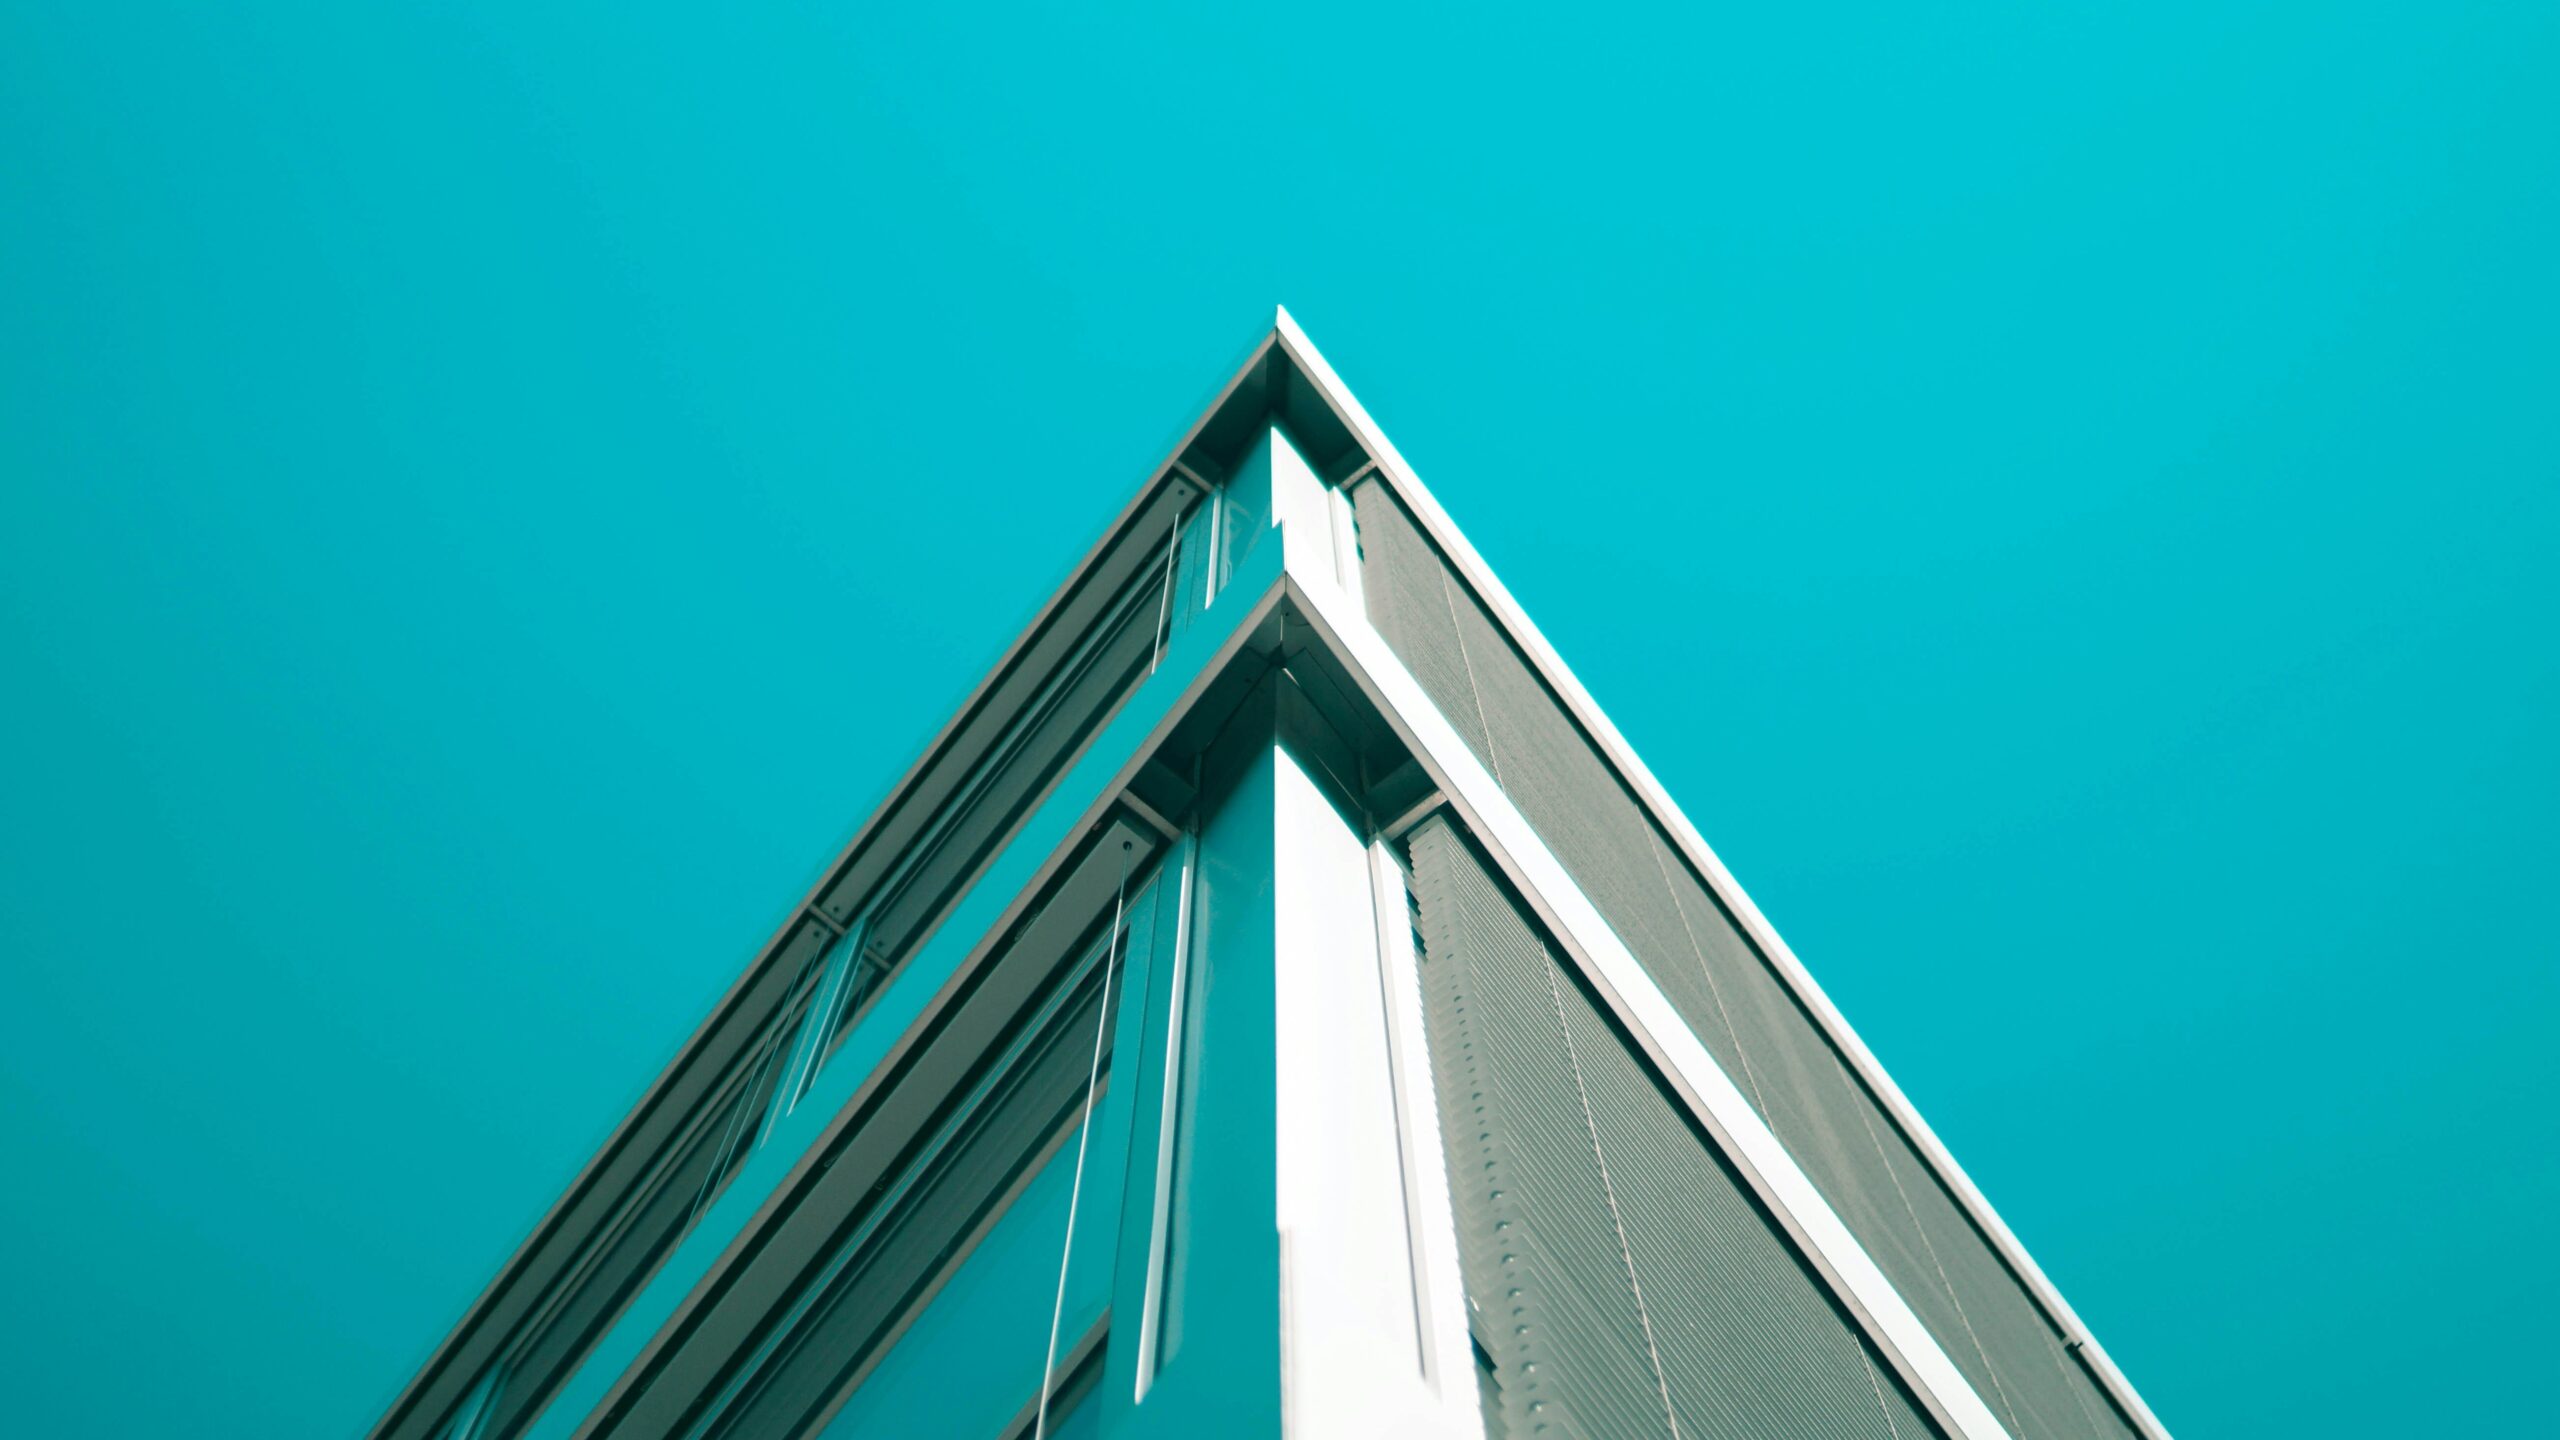 sfr property management gray-blue condo building roof snapshot on blue sky